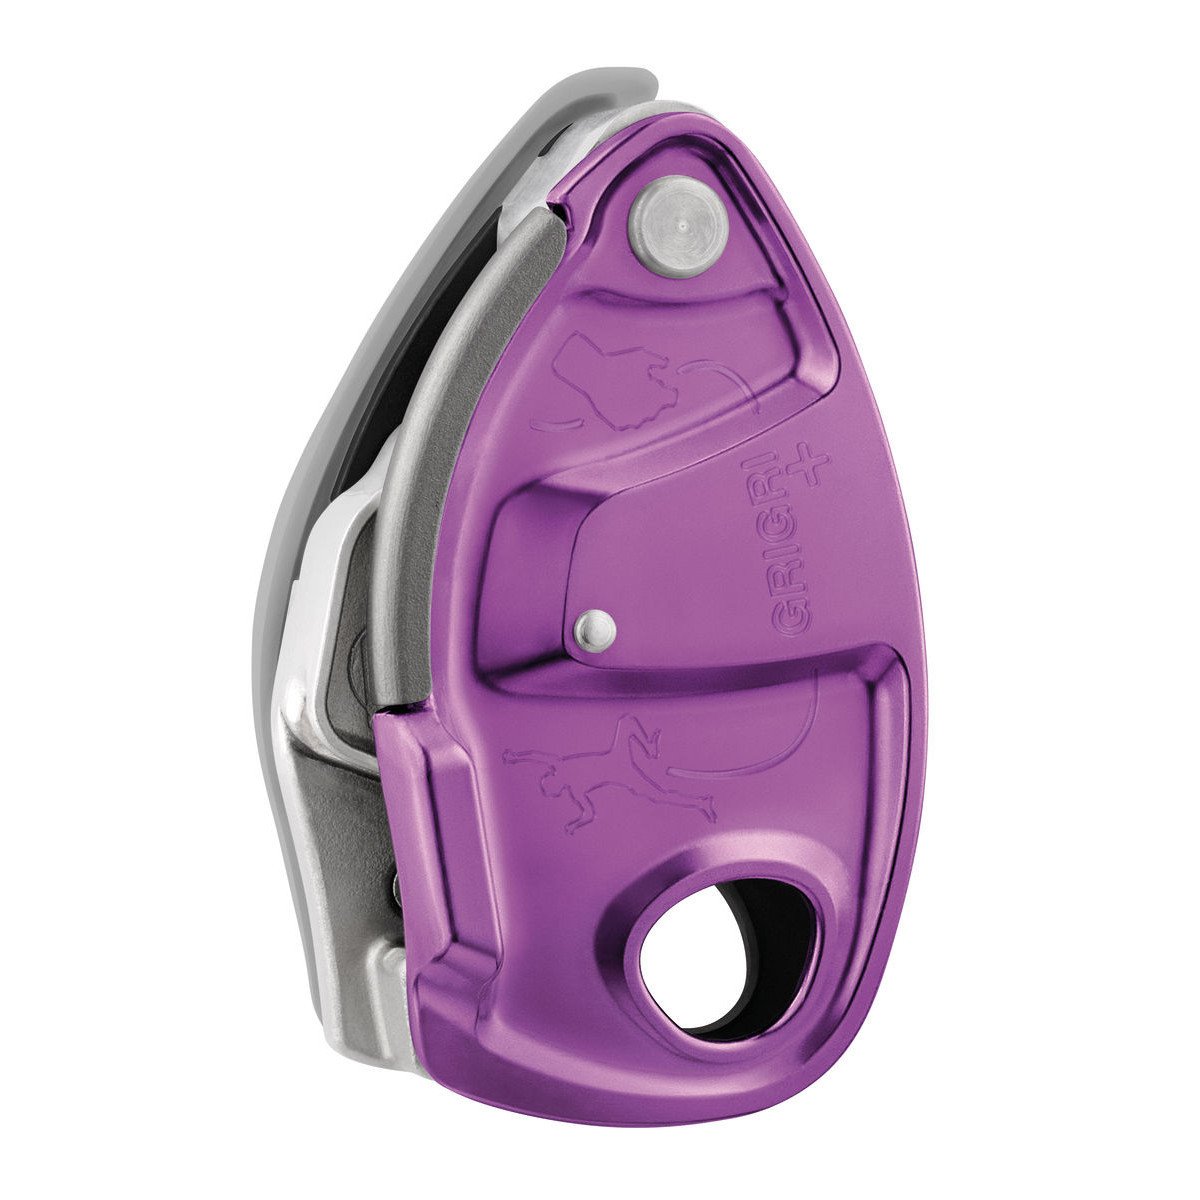 Petzl Grigri + climbing belay device, in purple colour